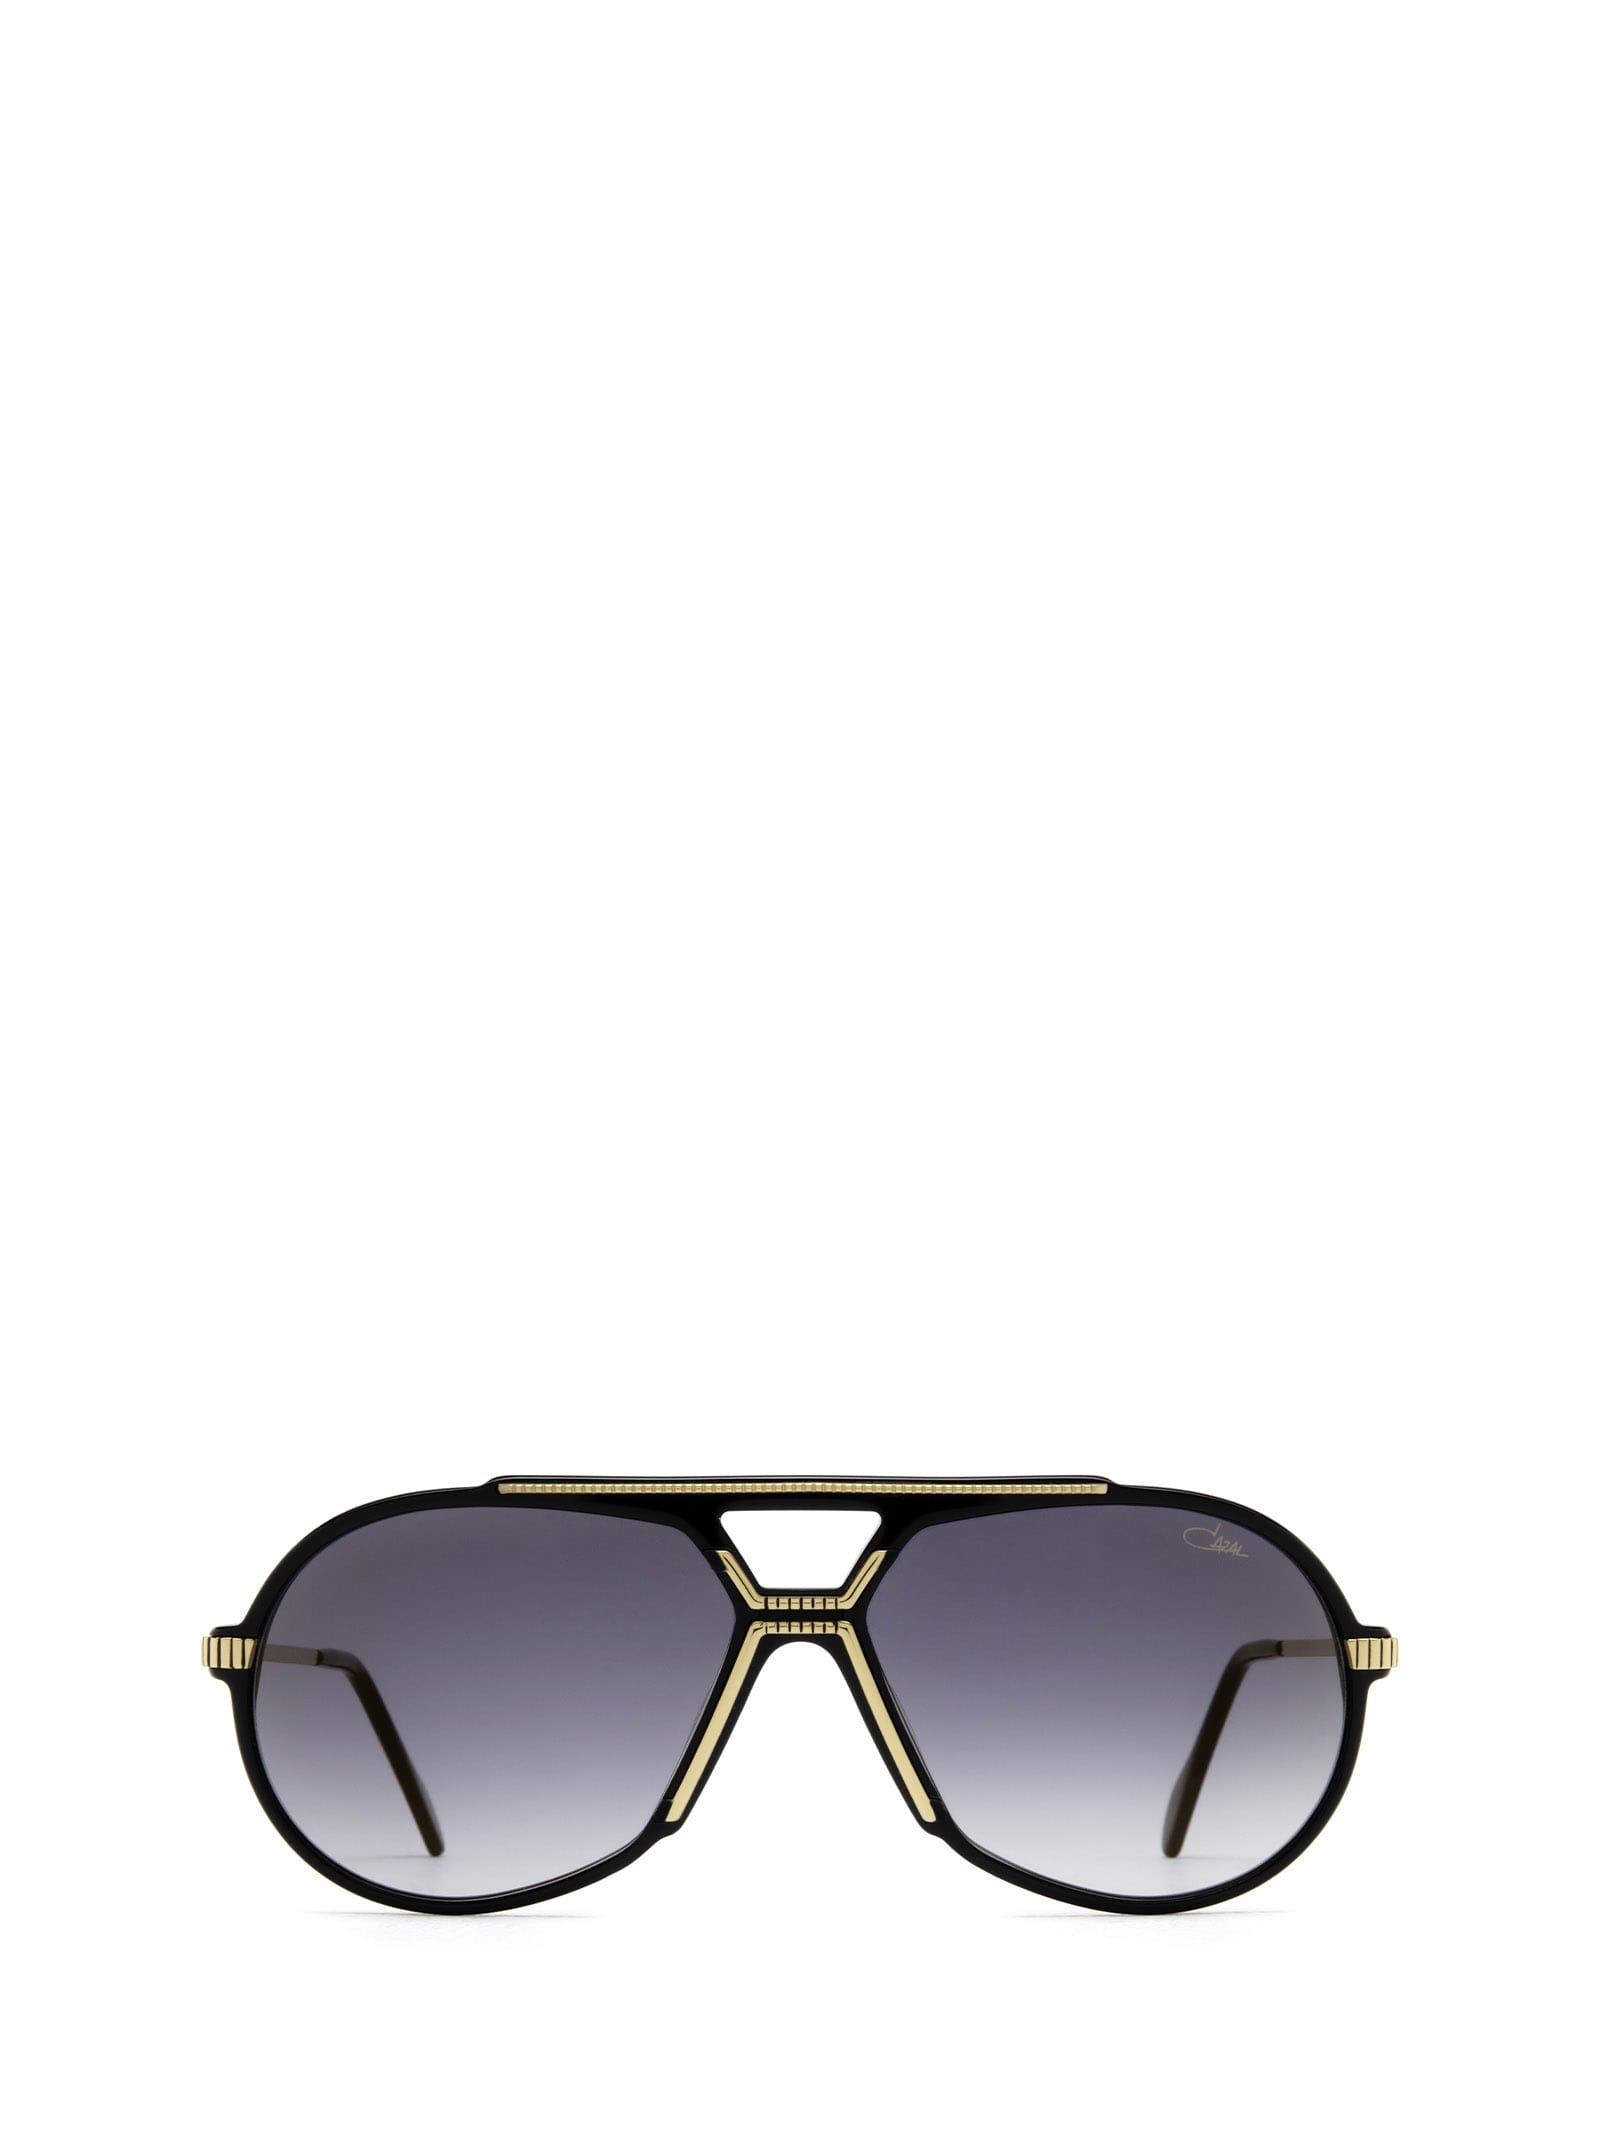 Cazal 888 Black - Gold Sunglasses